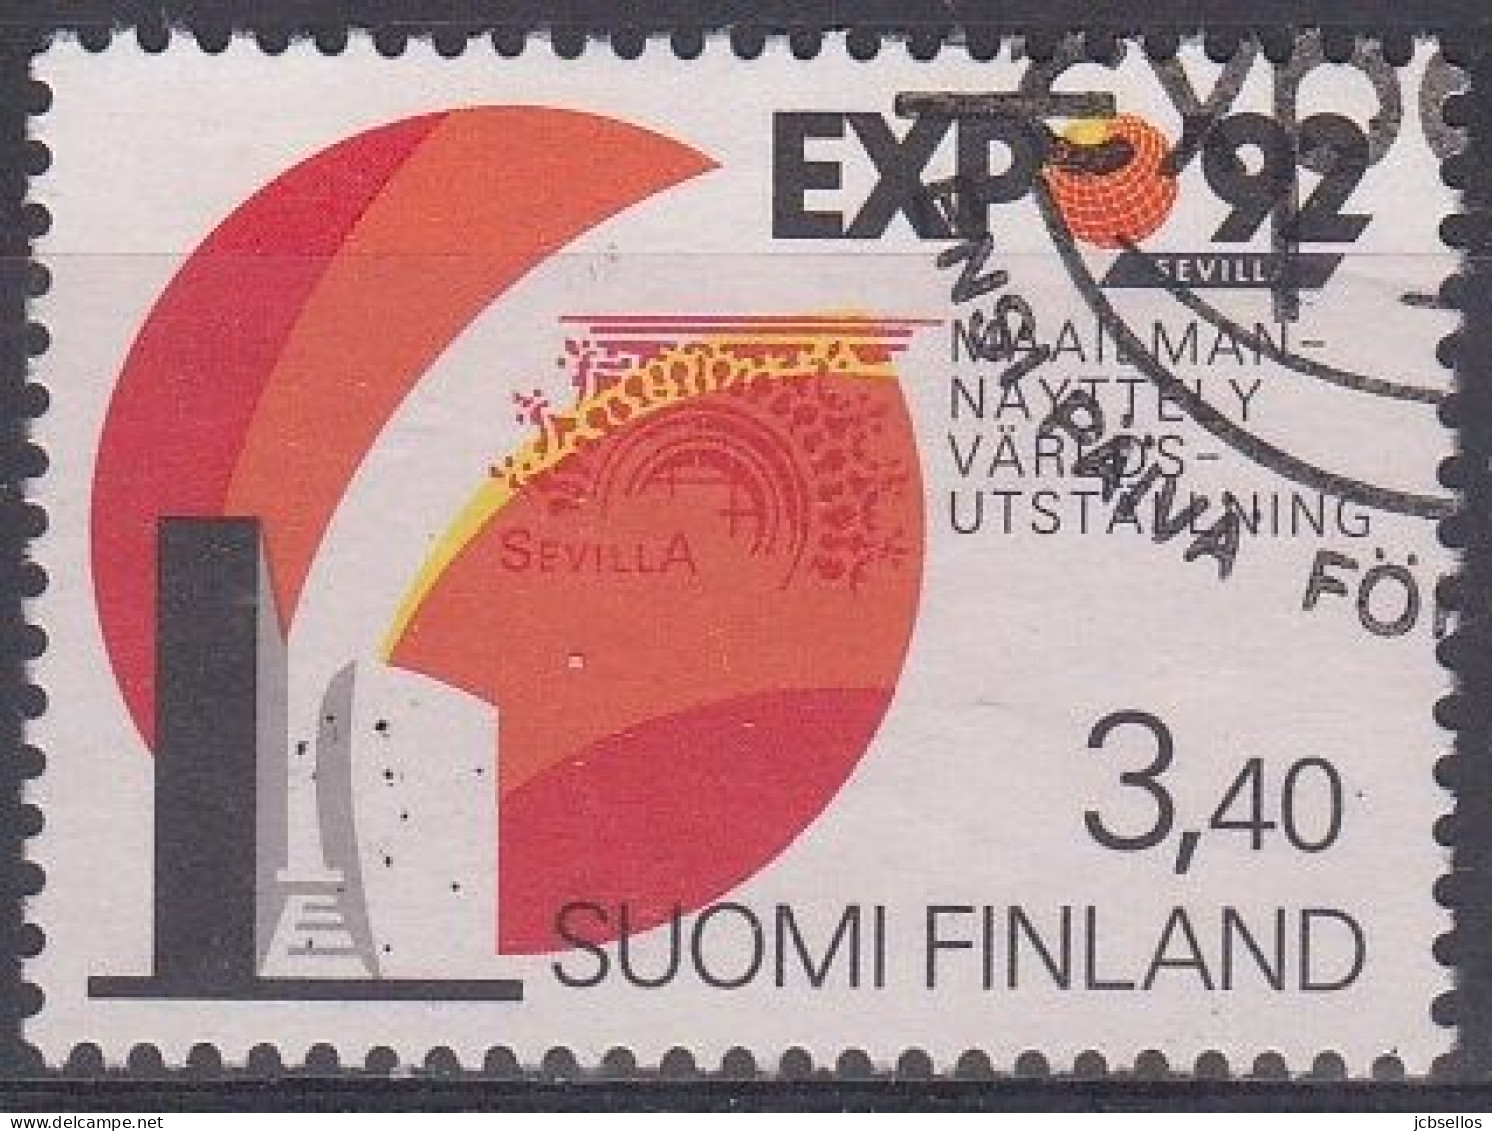 FINLANDIA 1992 Nº 1131 USADO - Usati